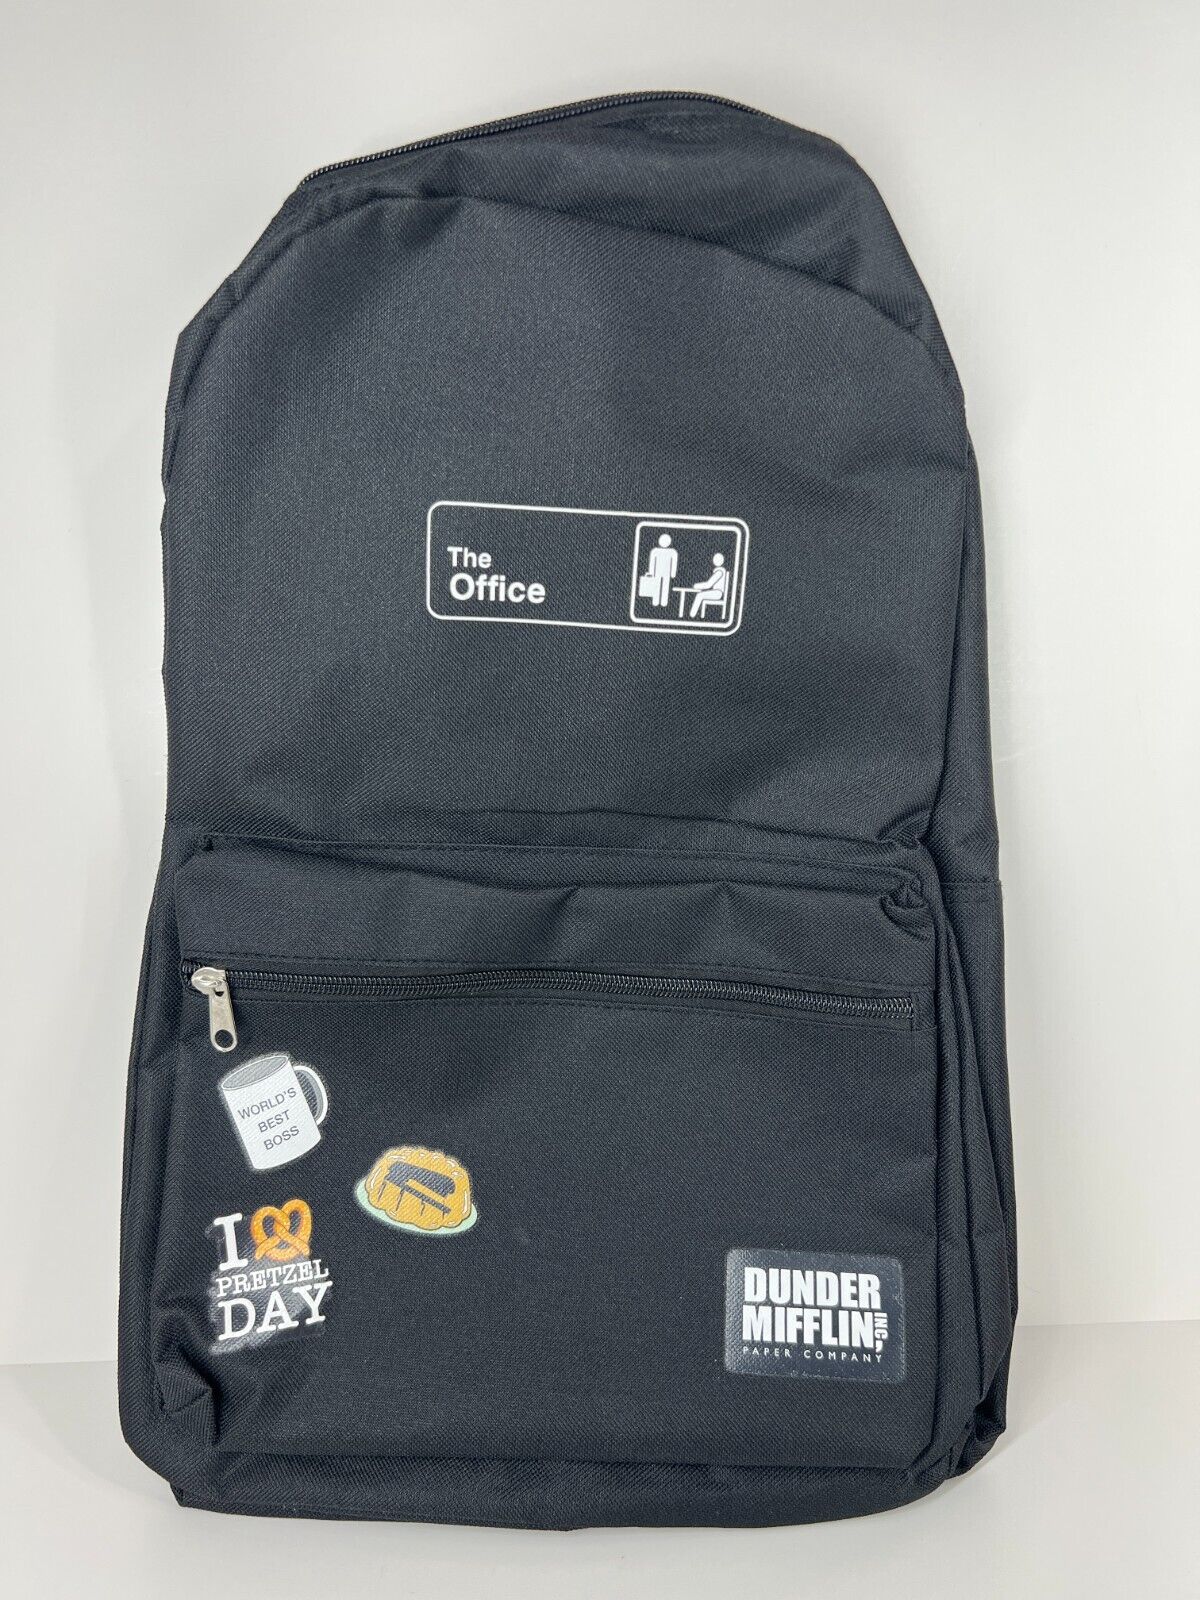 The Office Dunder Mifflin backpack bag black small adult adjustable zip up